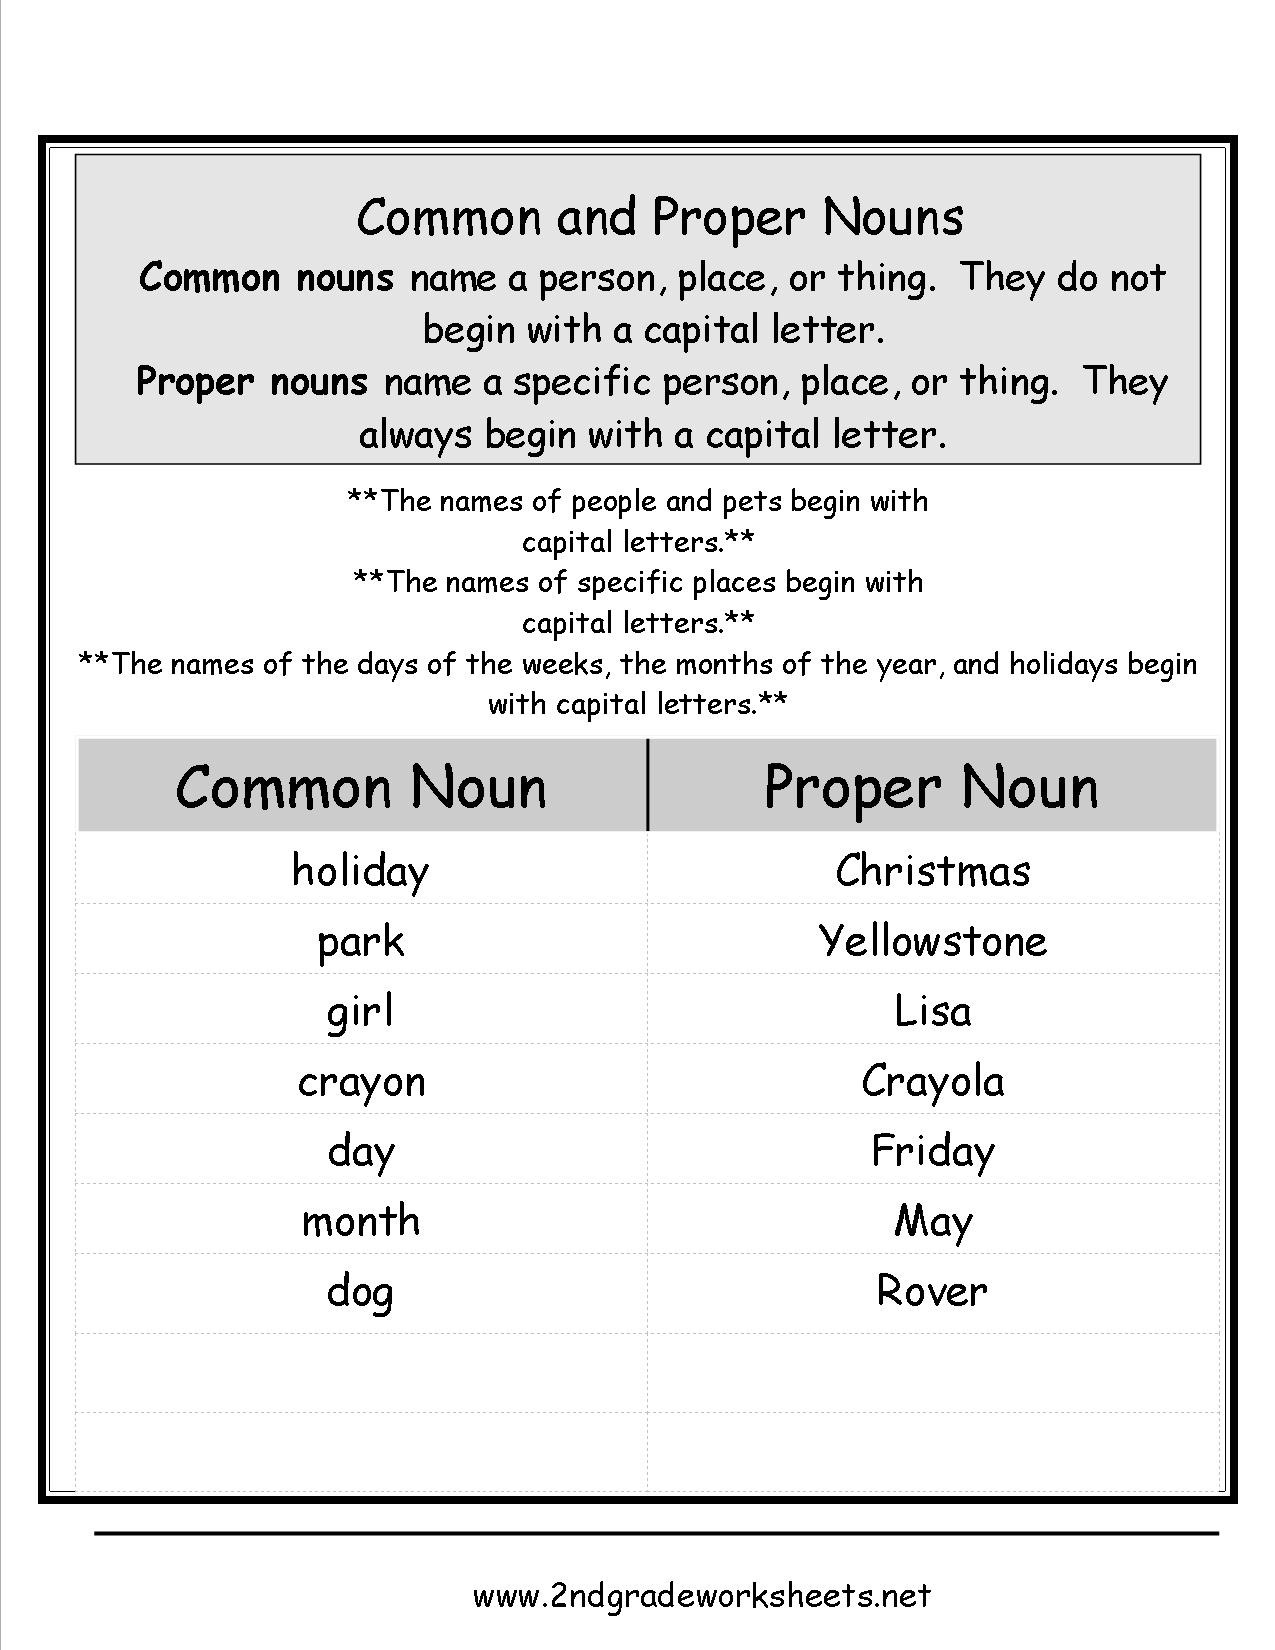 Proper Nouns Worksheet 2nd Grade Mon and Proper Nouns Worksheet